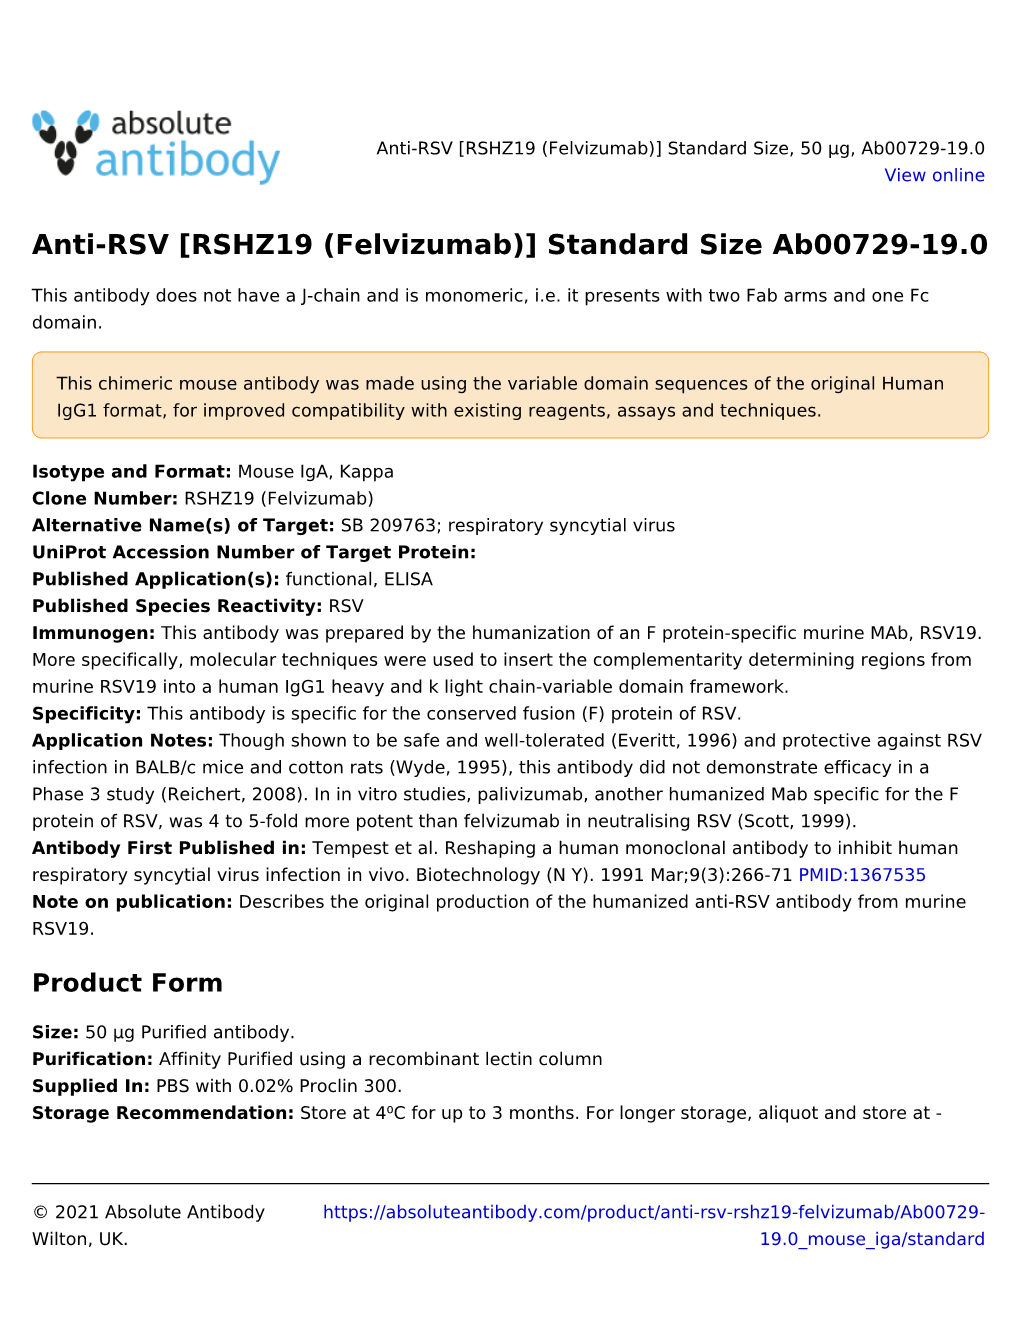 Anti-RSV [RSHZ19 (Felvizumab)] Standard Size Ab00729-19.0